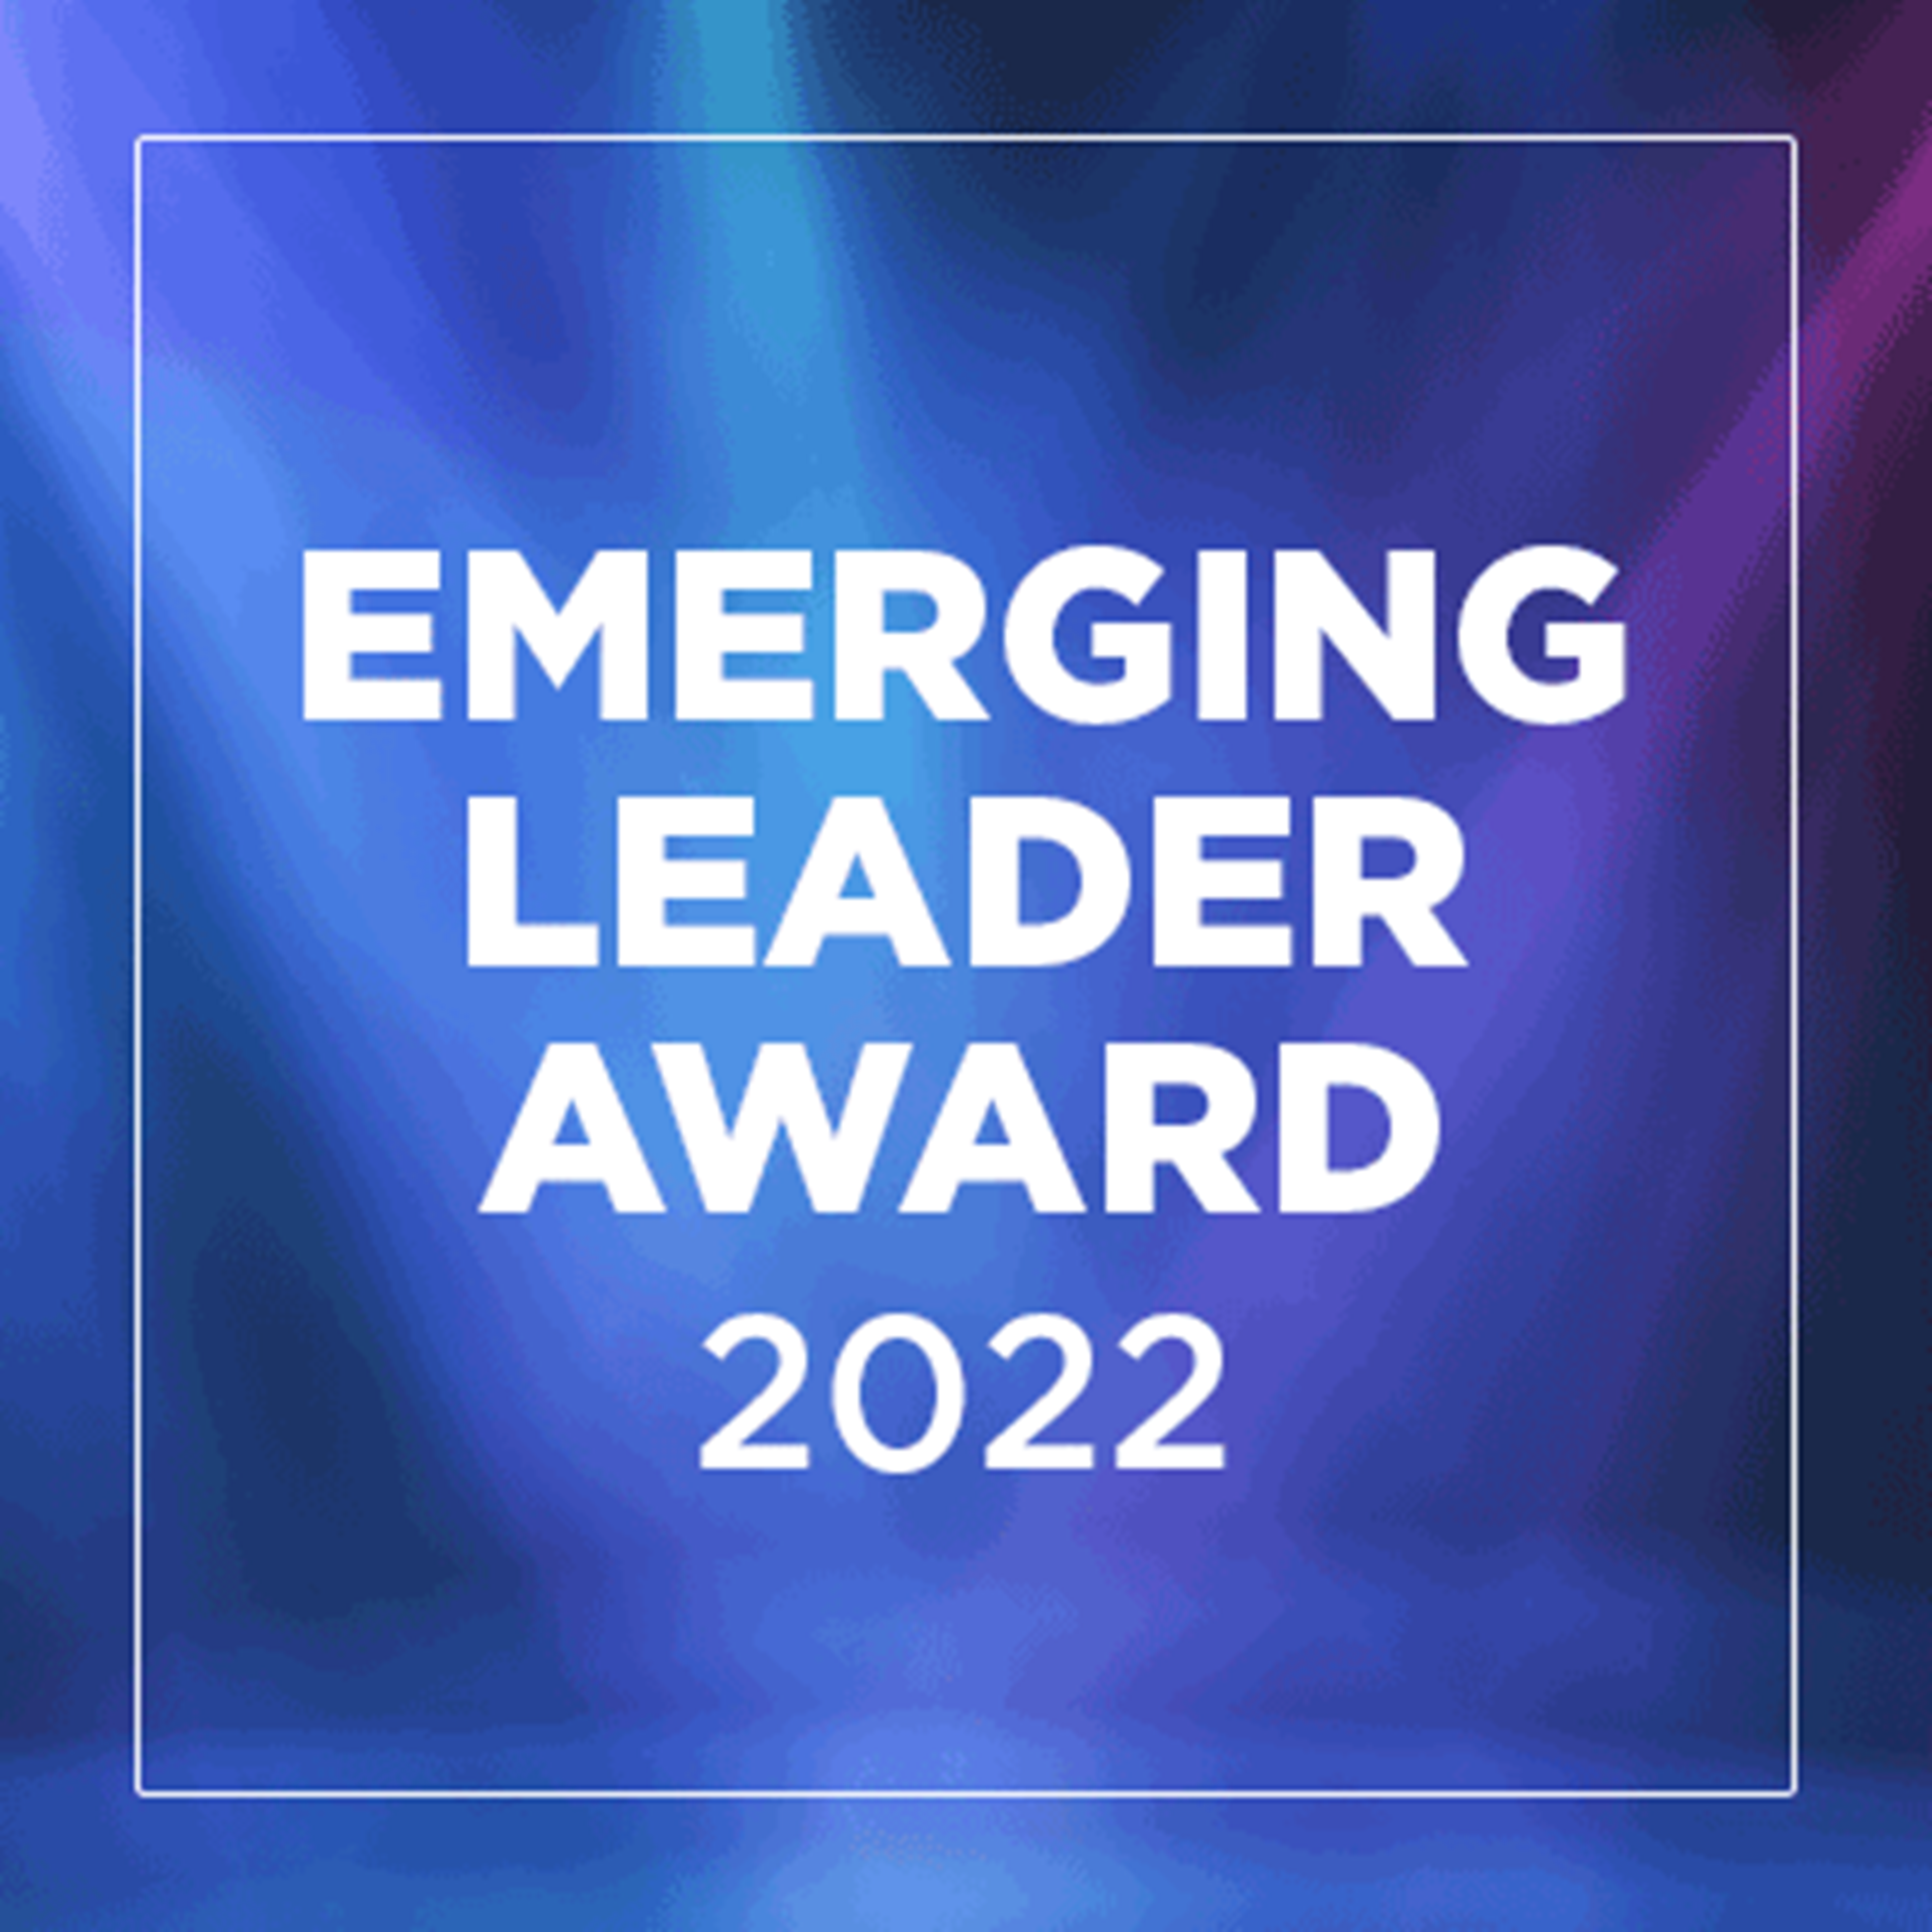 Emerging Leader Award 2022